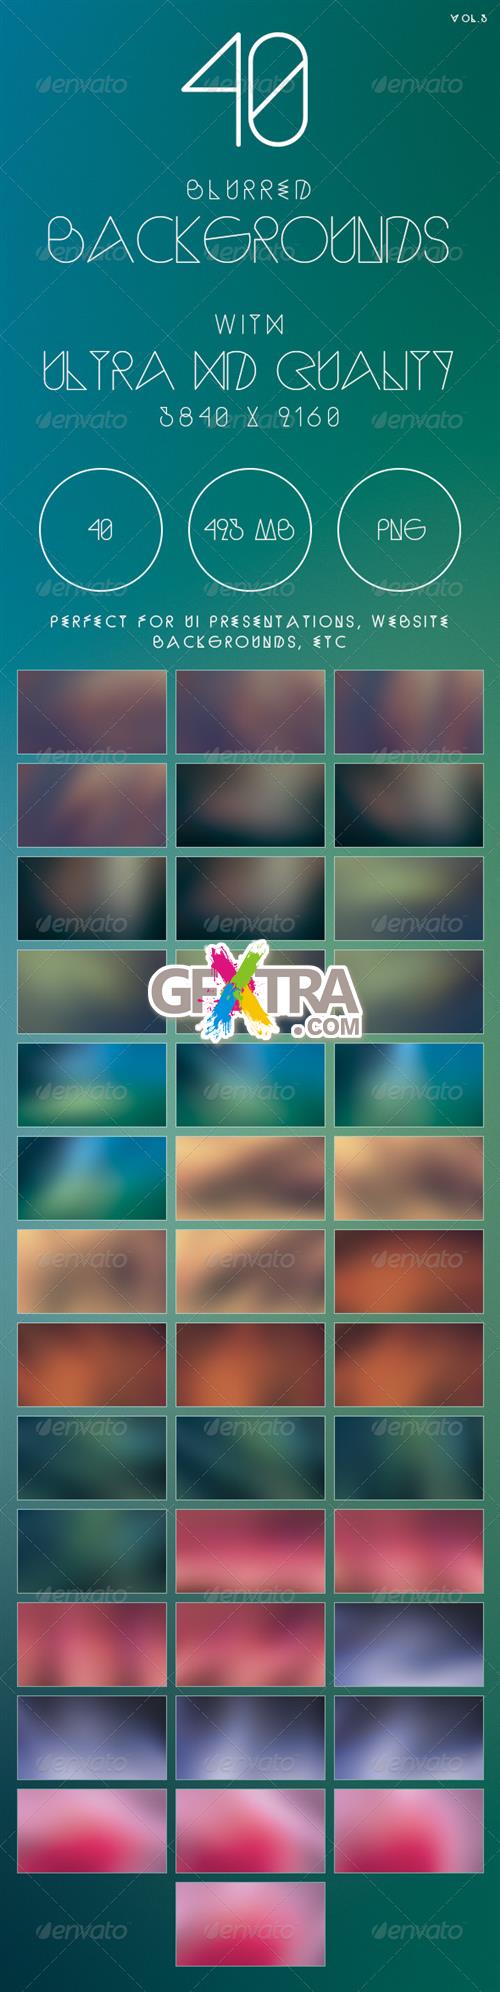 GraphicRiver - Blur - Blurred Ultra HD Backgrounds vol.3